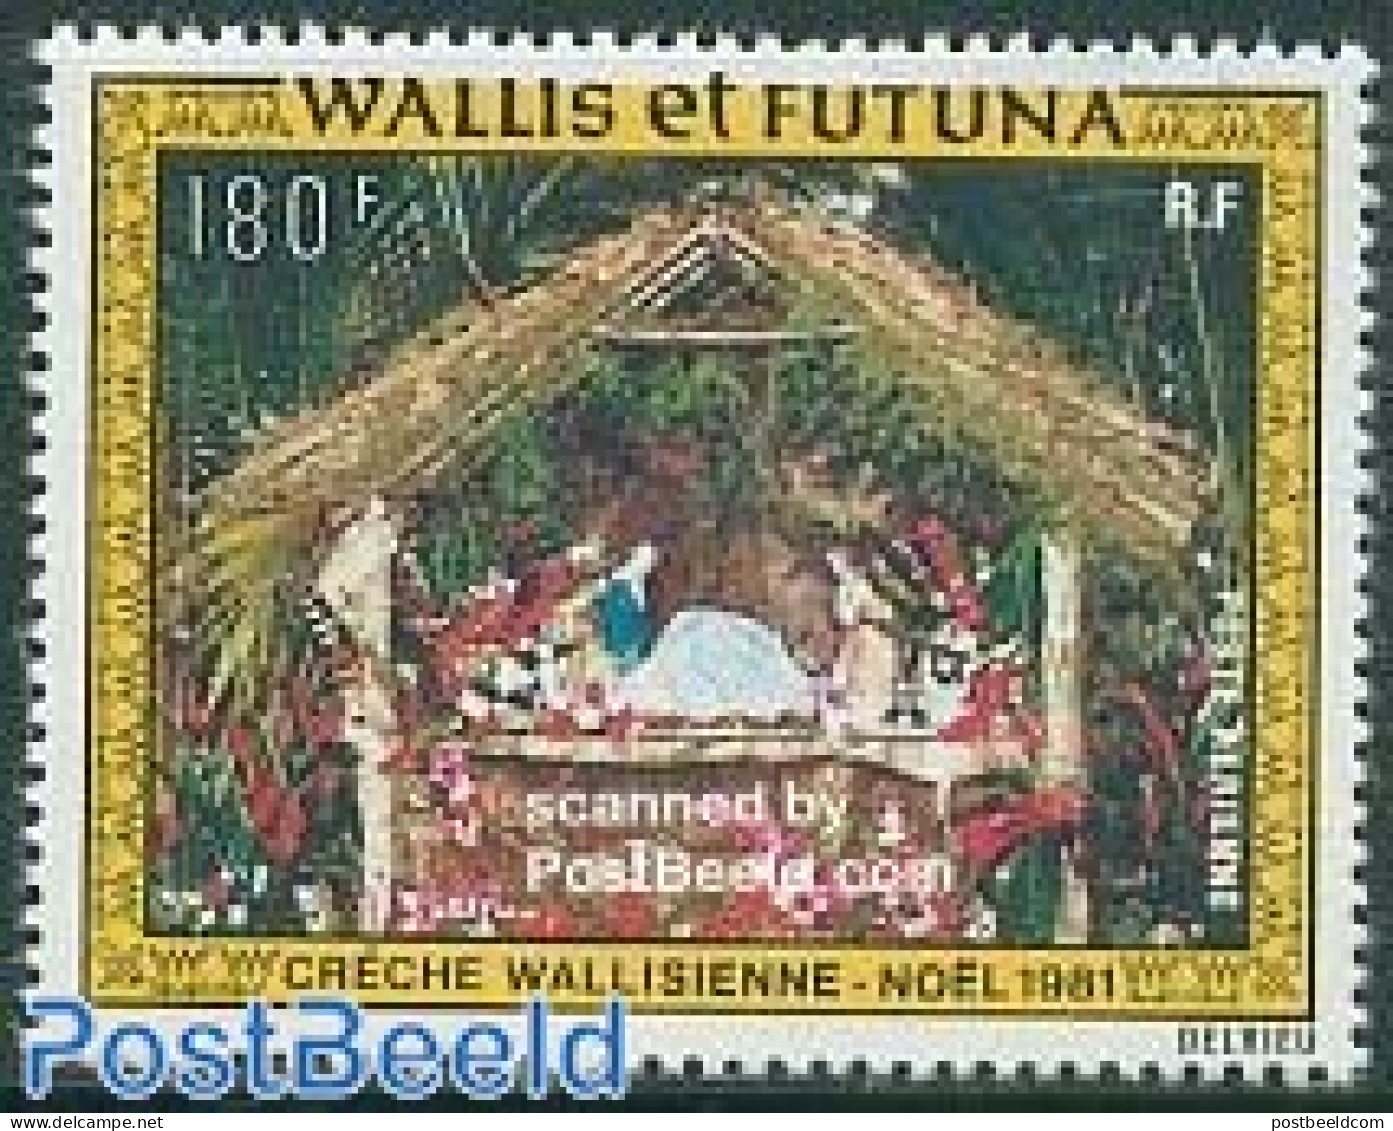 Wallis & Futuna 1981 Christmas 1v, Mint NH, Religion - Christmas - Noël